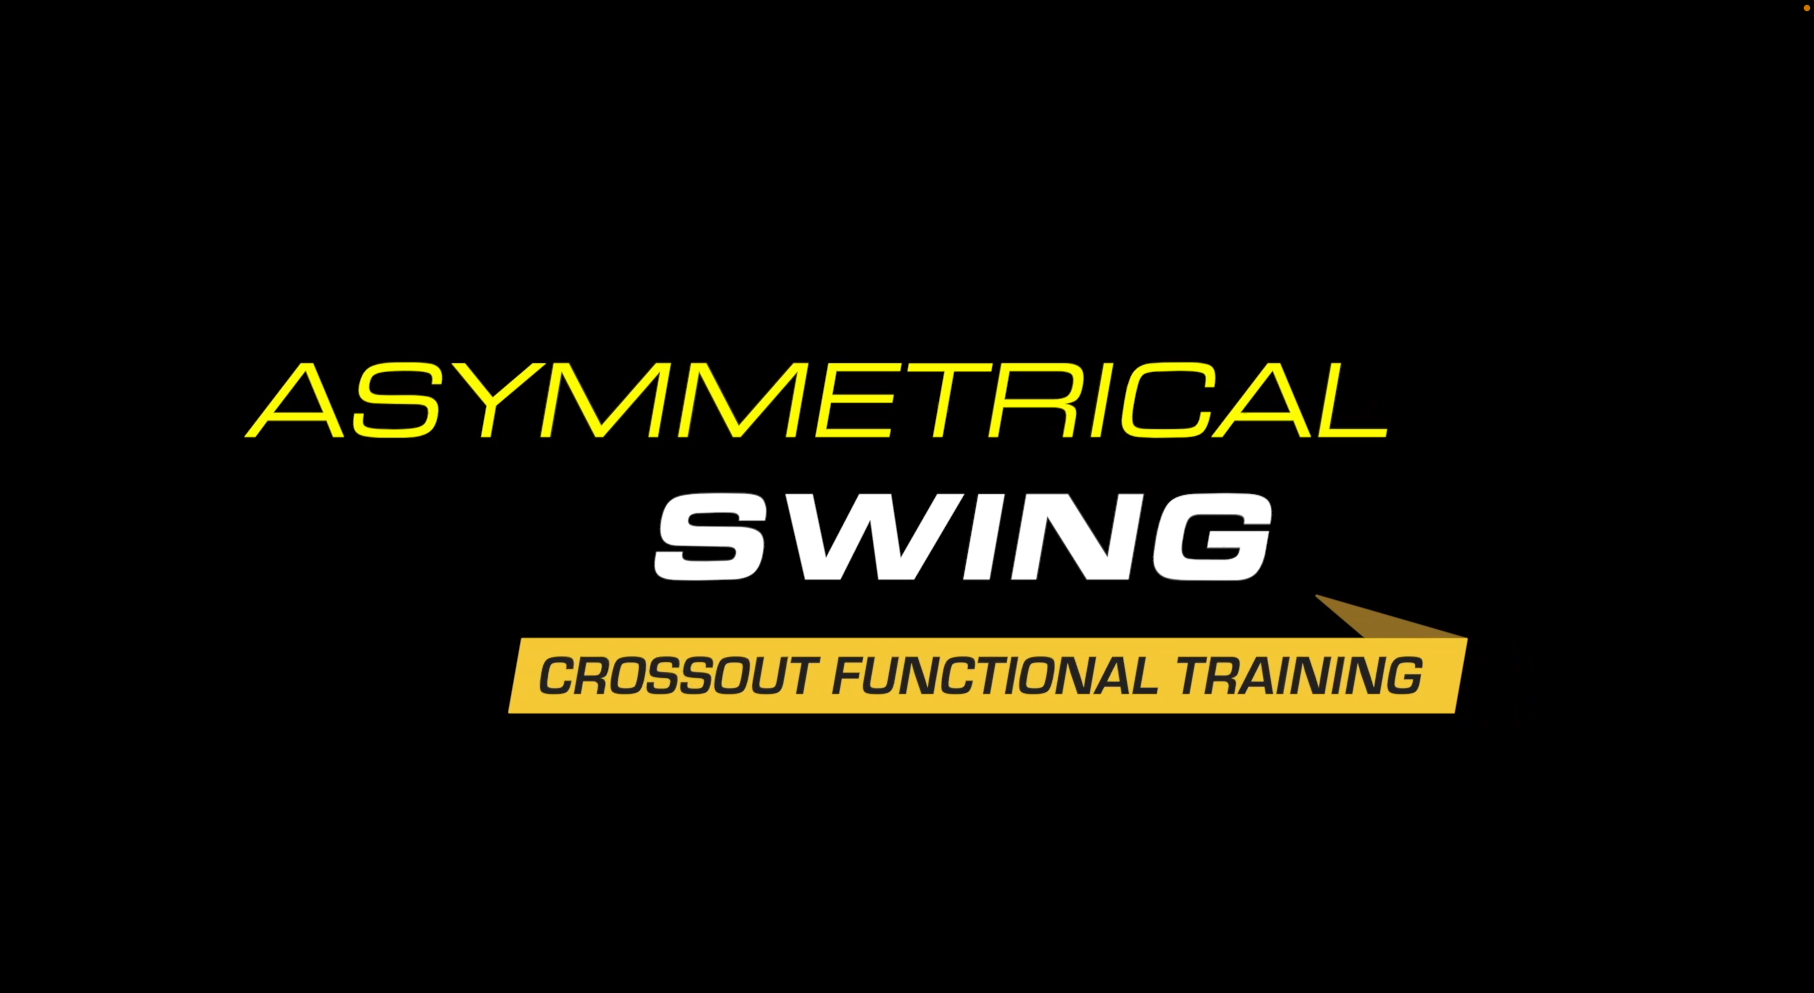 Asymmetrical Swing Crossout Functional Training